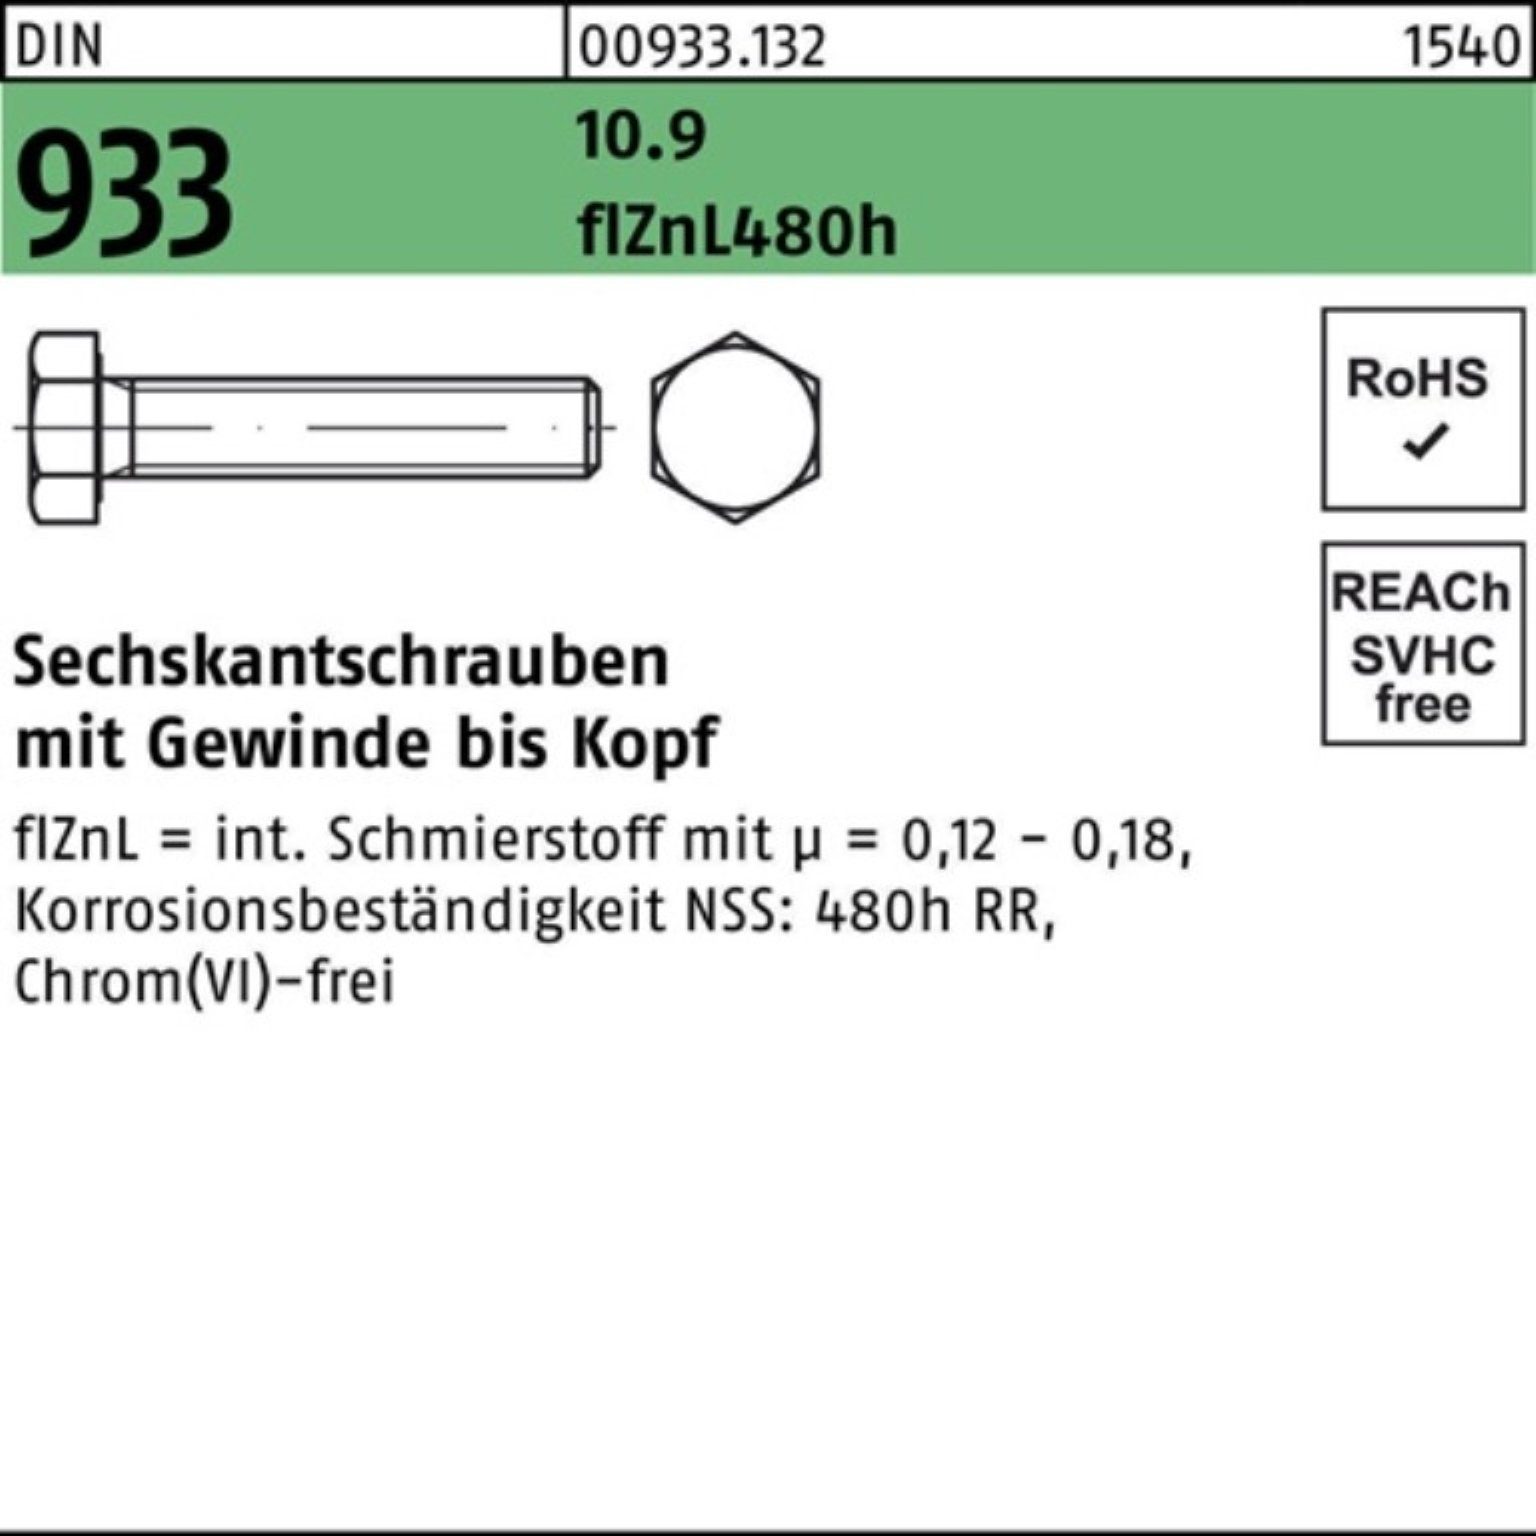 M16x 65 DIN Sechskantschraube flZnL/nc/x/x/480h VG Pack 10.9 933 100er Sechskantschraube Reyher